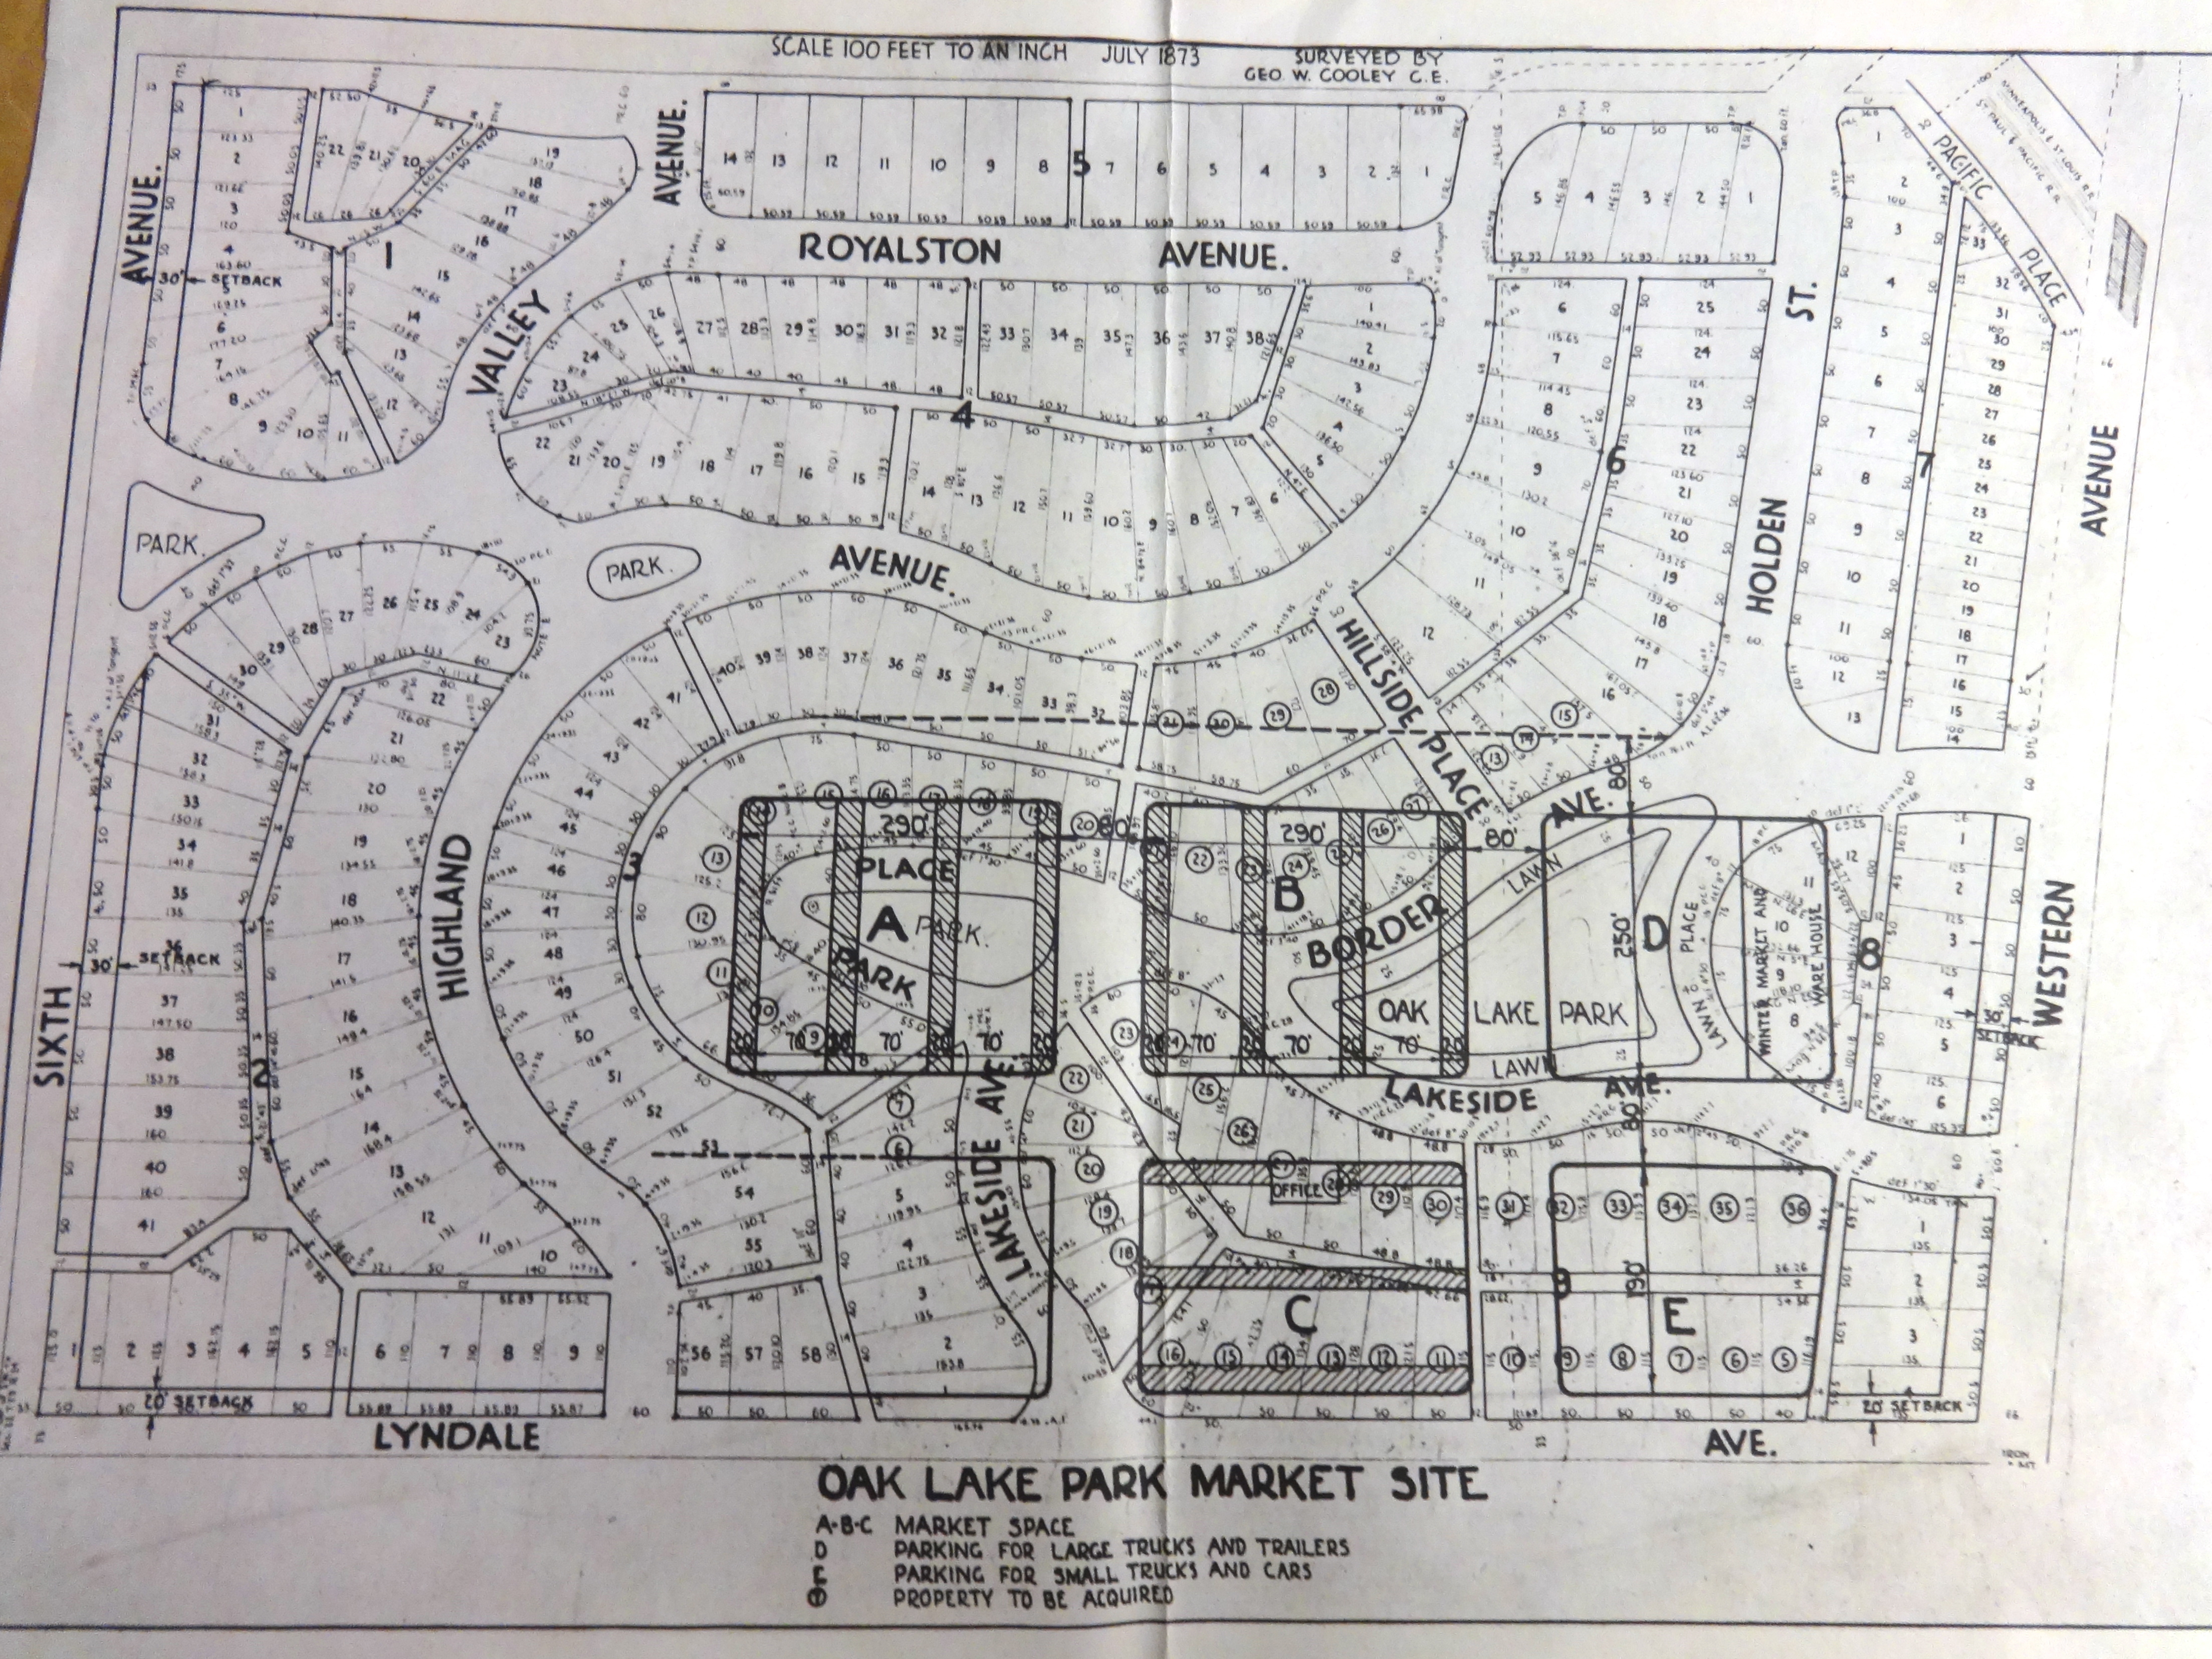 Oak lake park redevelopment map, city archives, fixed, 4-6-2014